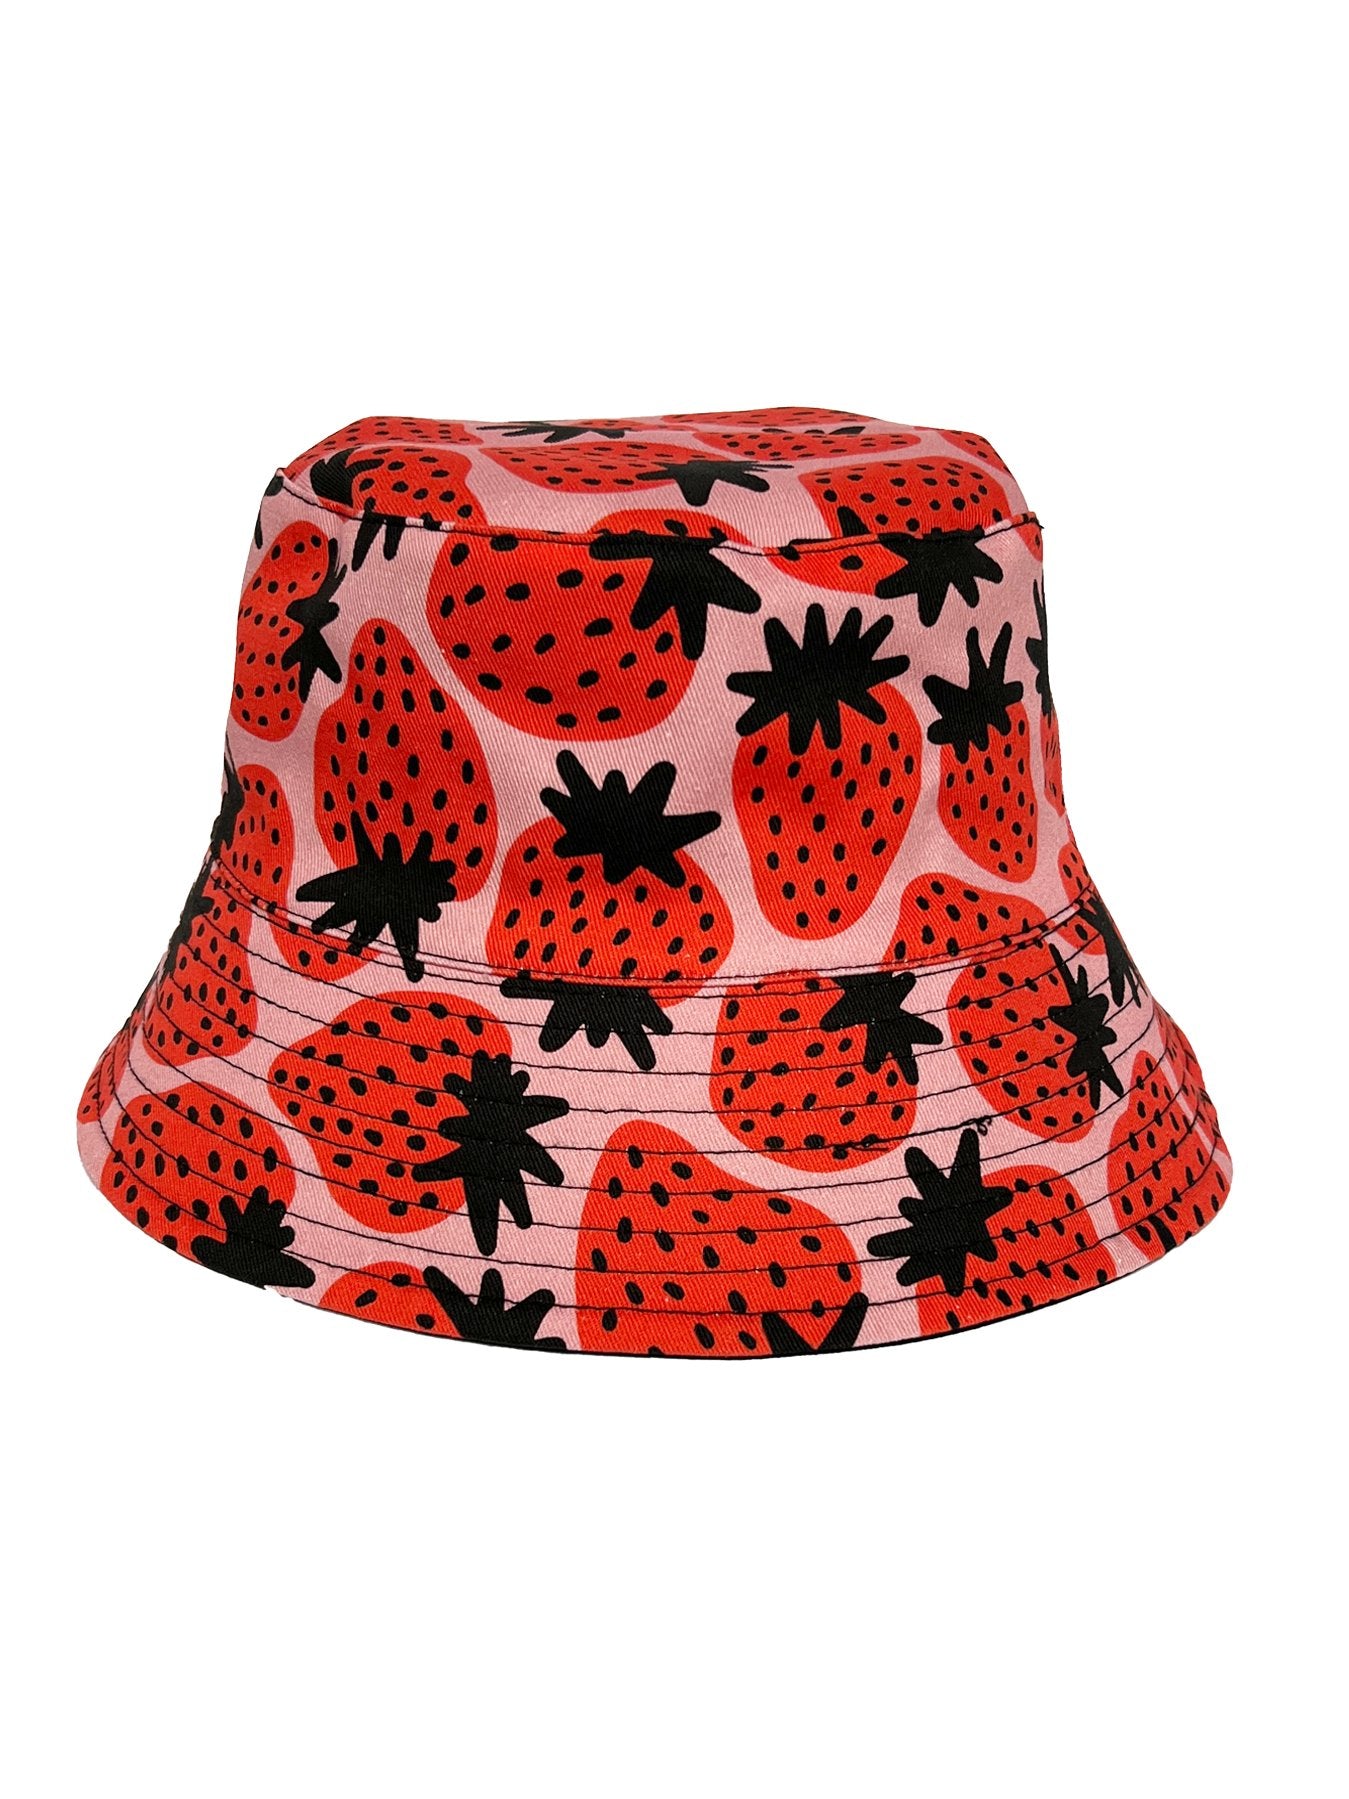 BERTA bucket hat Strawberry - Lesley Evers-23-HG100-W3-Best Seller-bucket hat